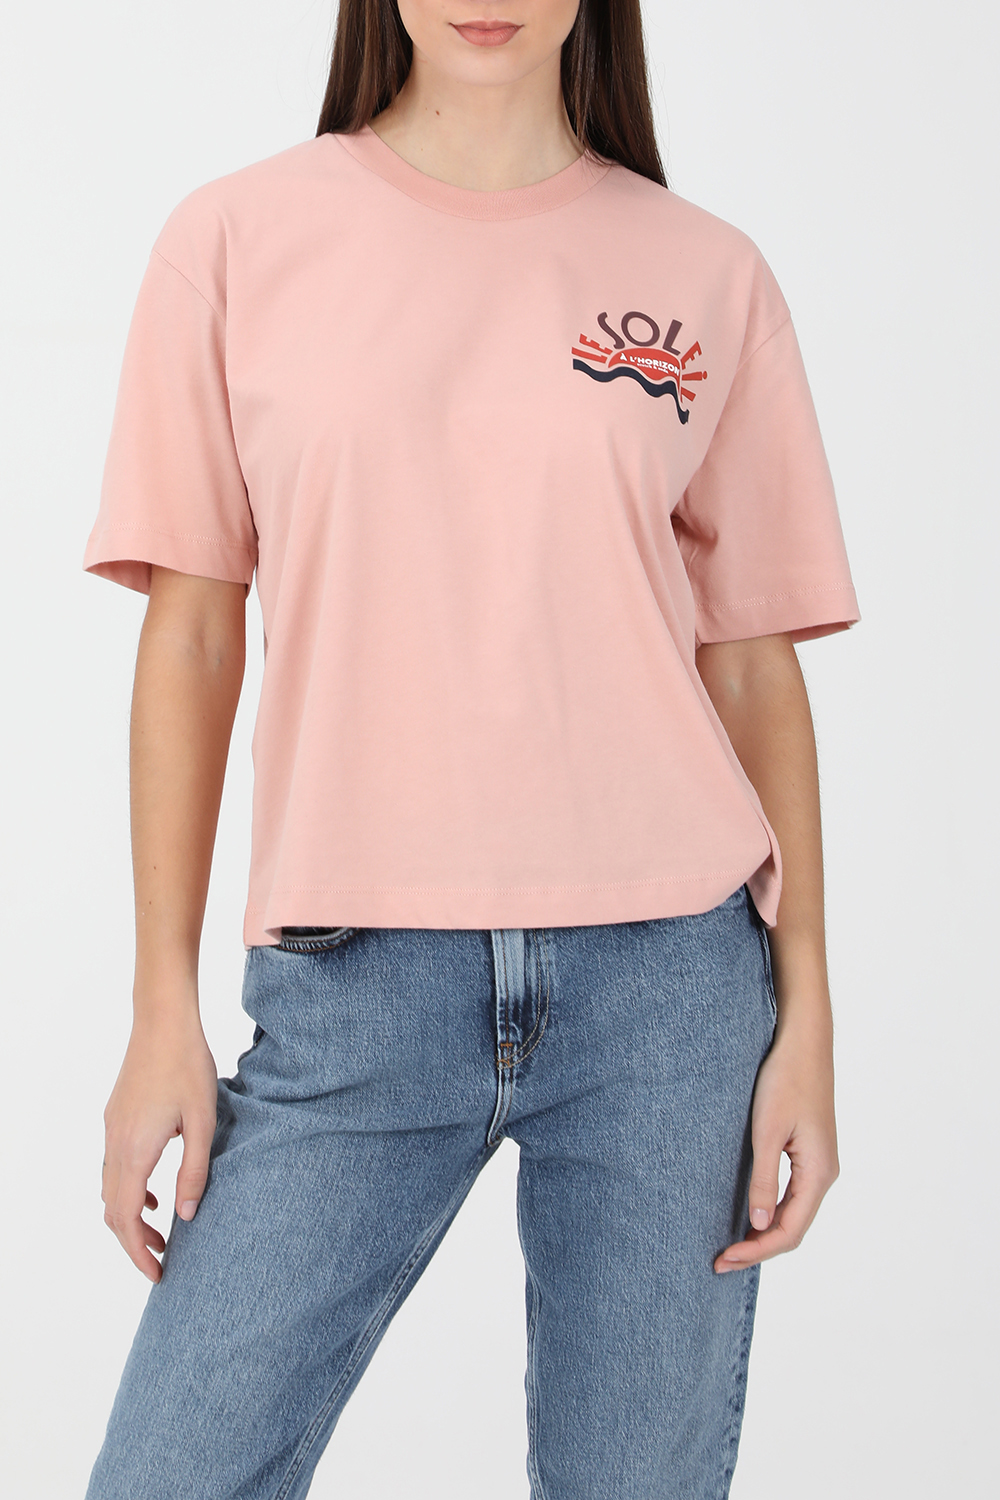 SCOTCH & SODA – Γυναικεια κοντομανικη μπλουζα SCOTCH & SODA ροζ